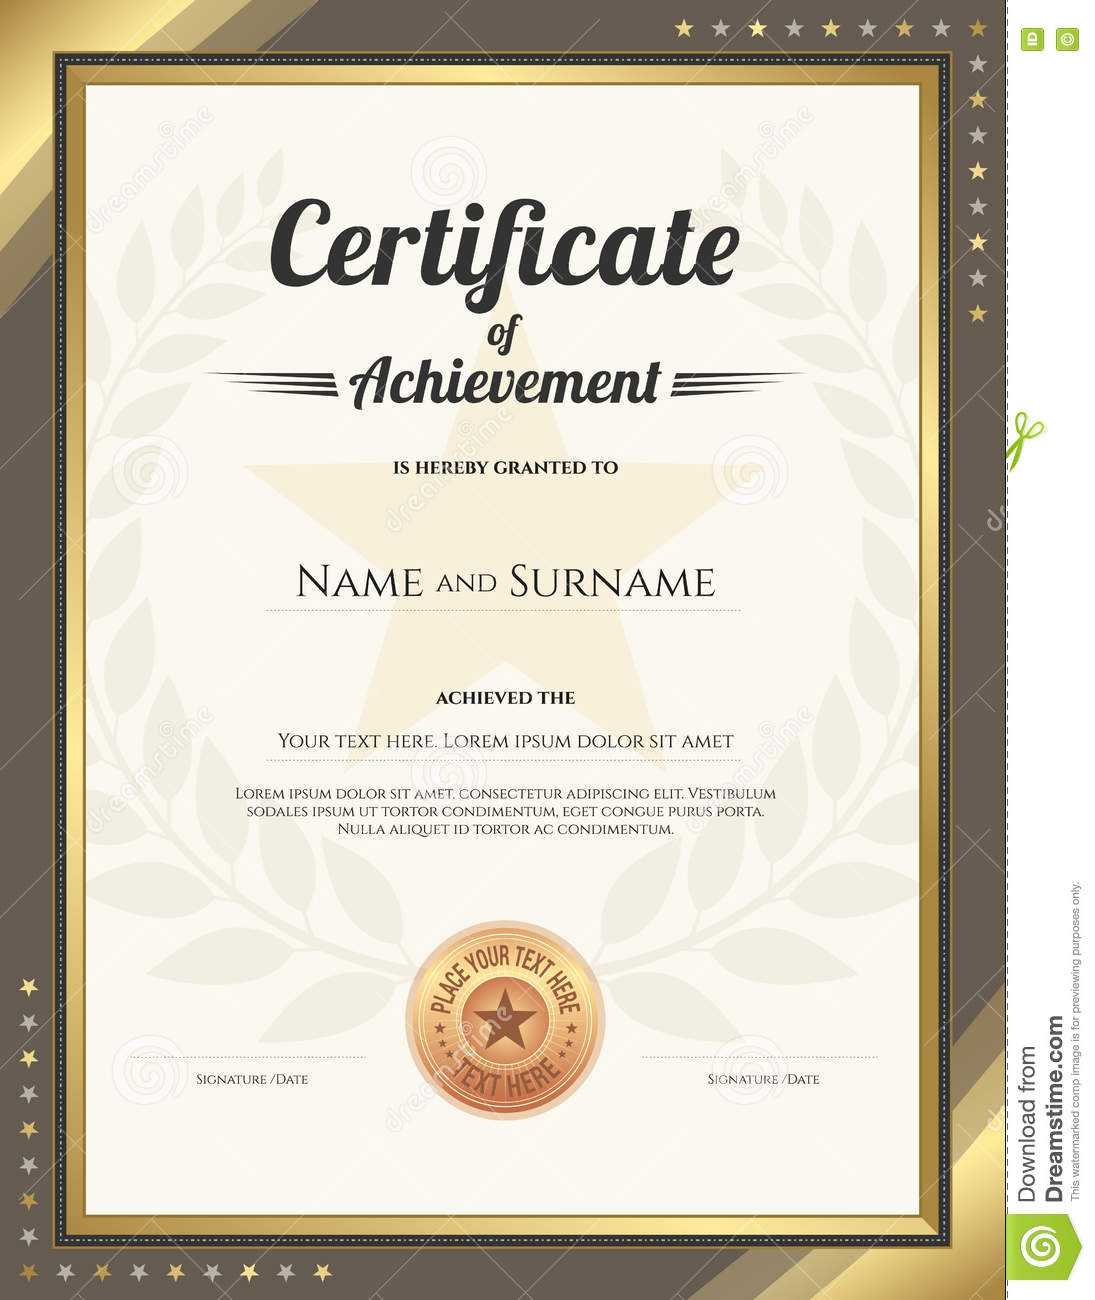 Portrait Certificate Of Achievement Template With Gold With Star Naming Certificate Template